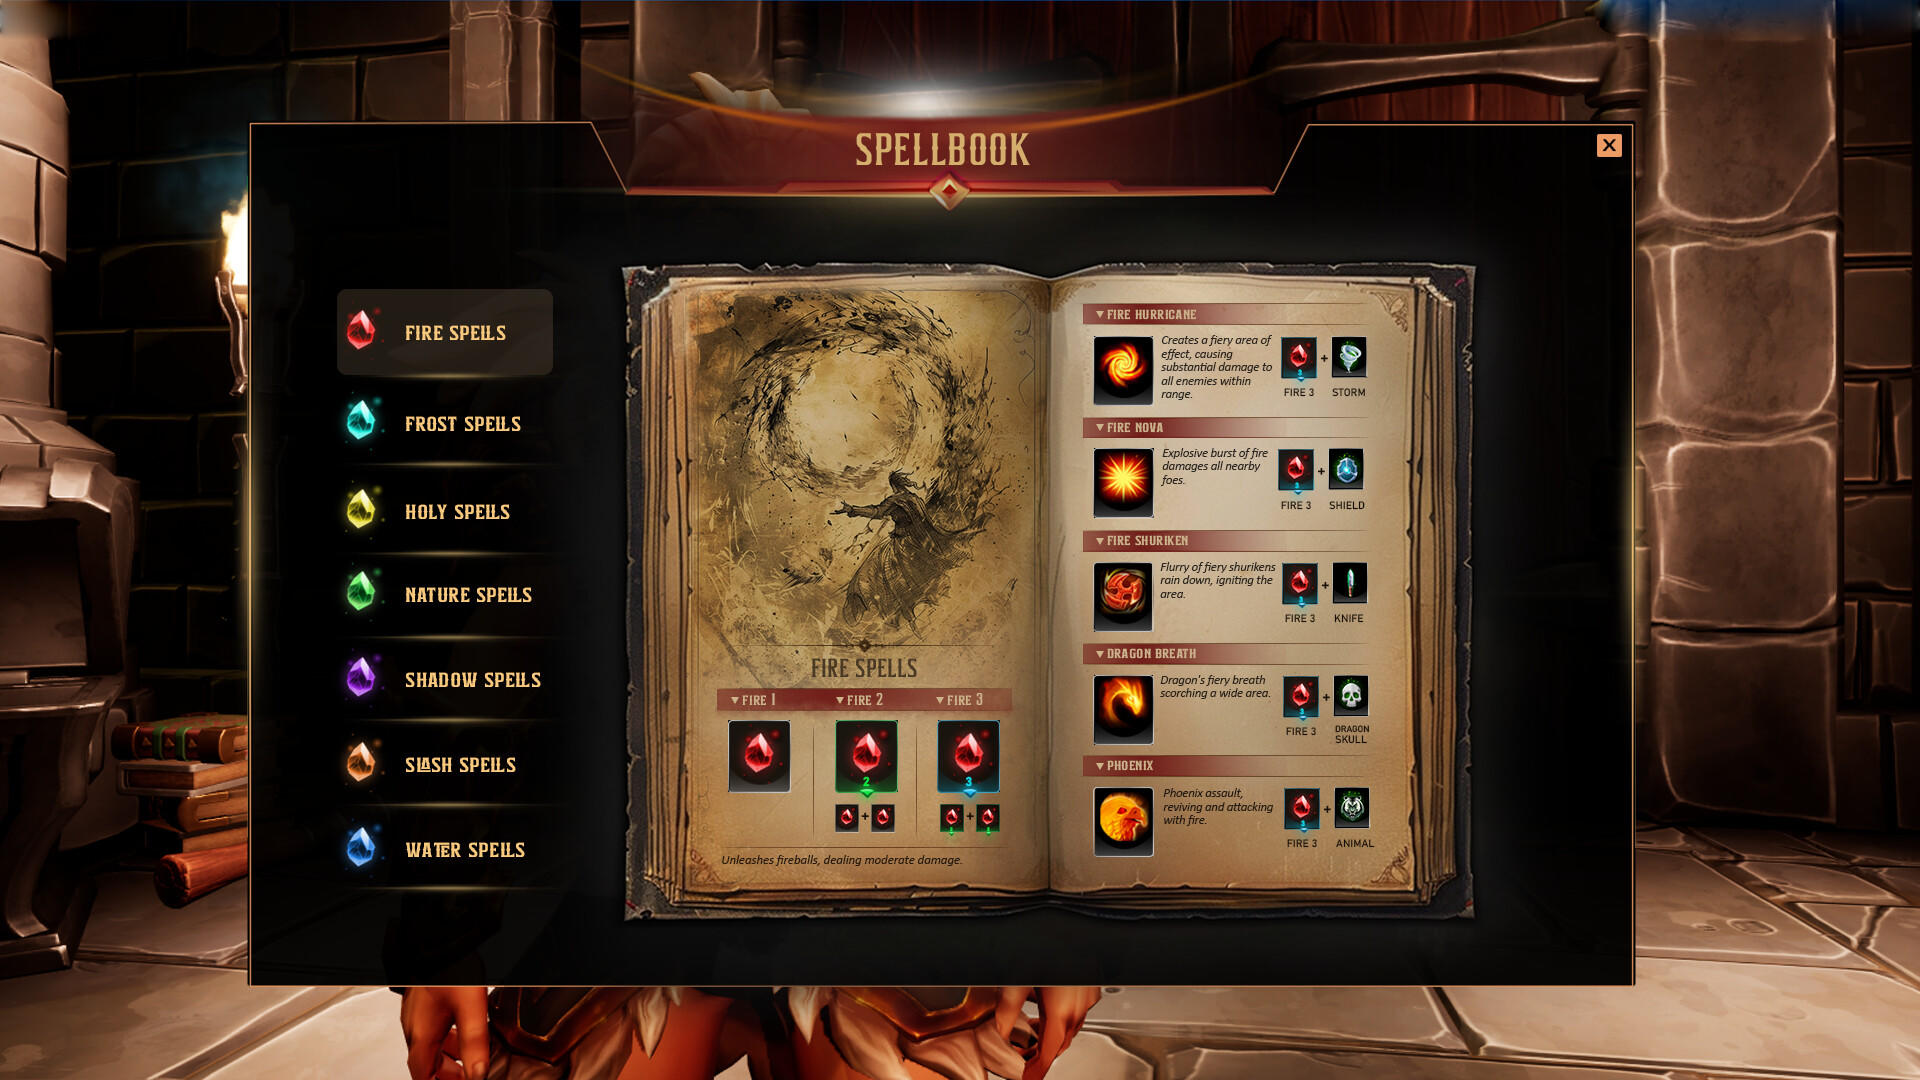 Screenshot of Nightfall Conquest